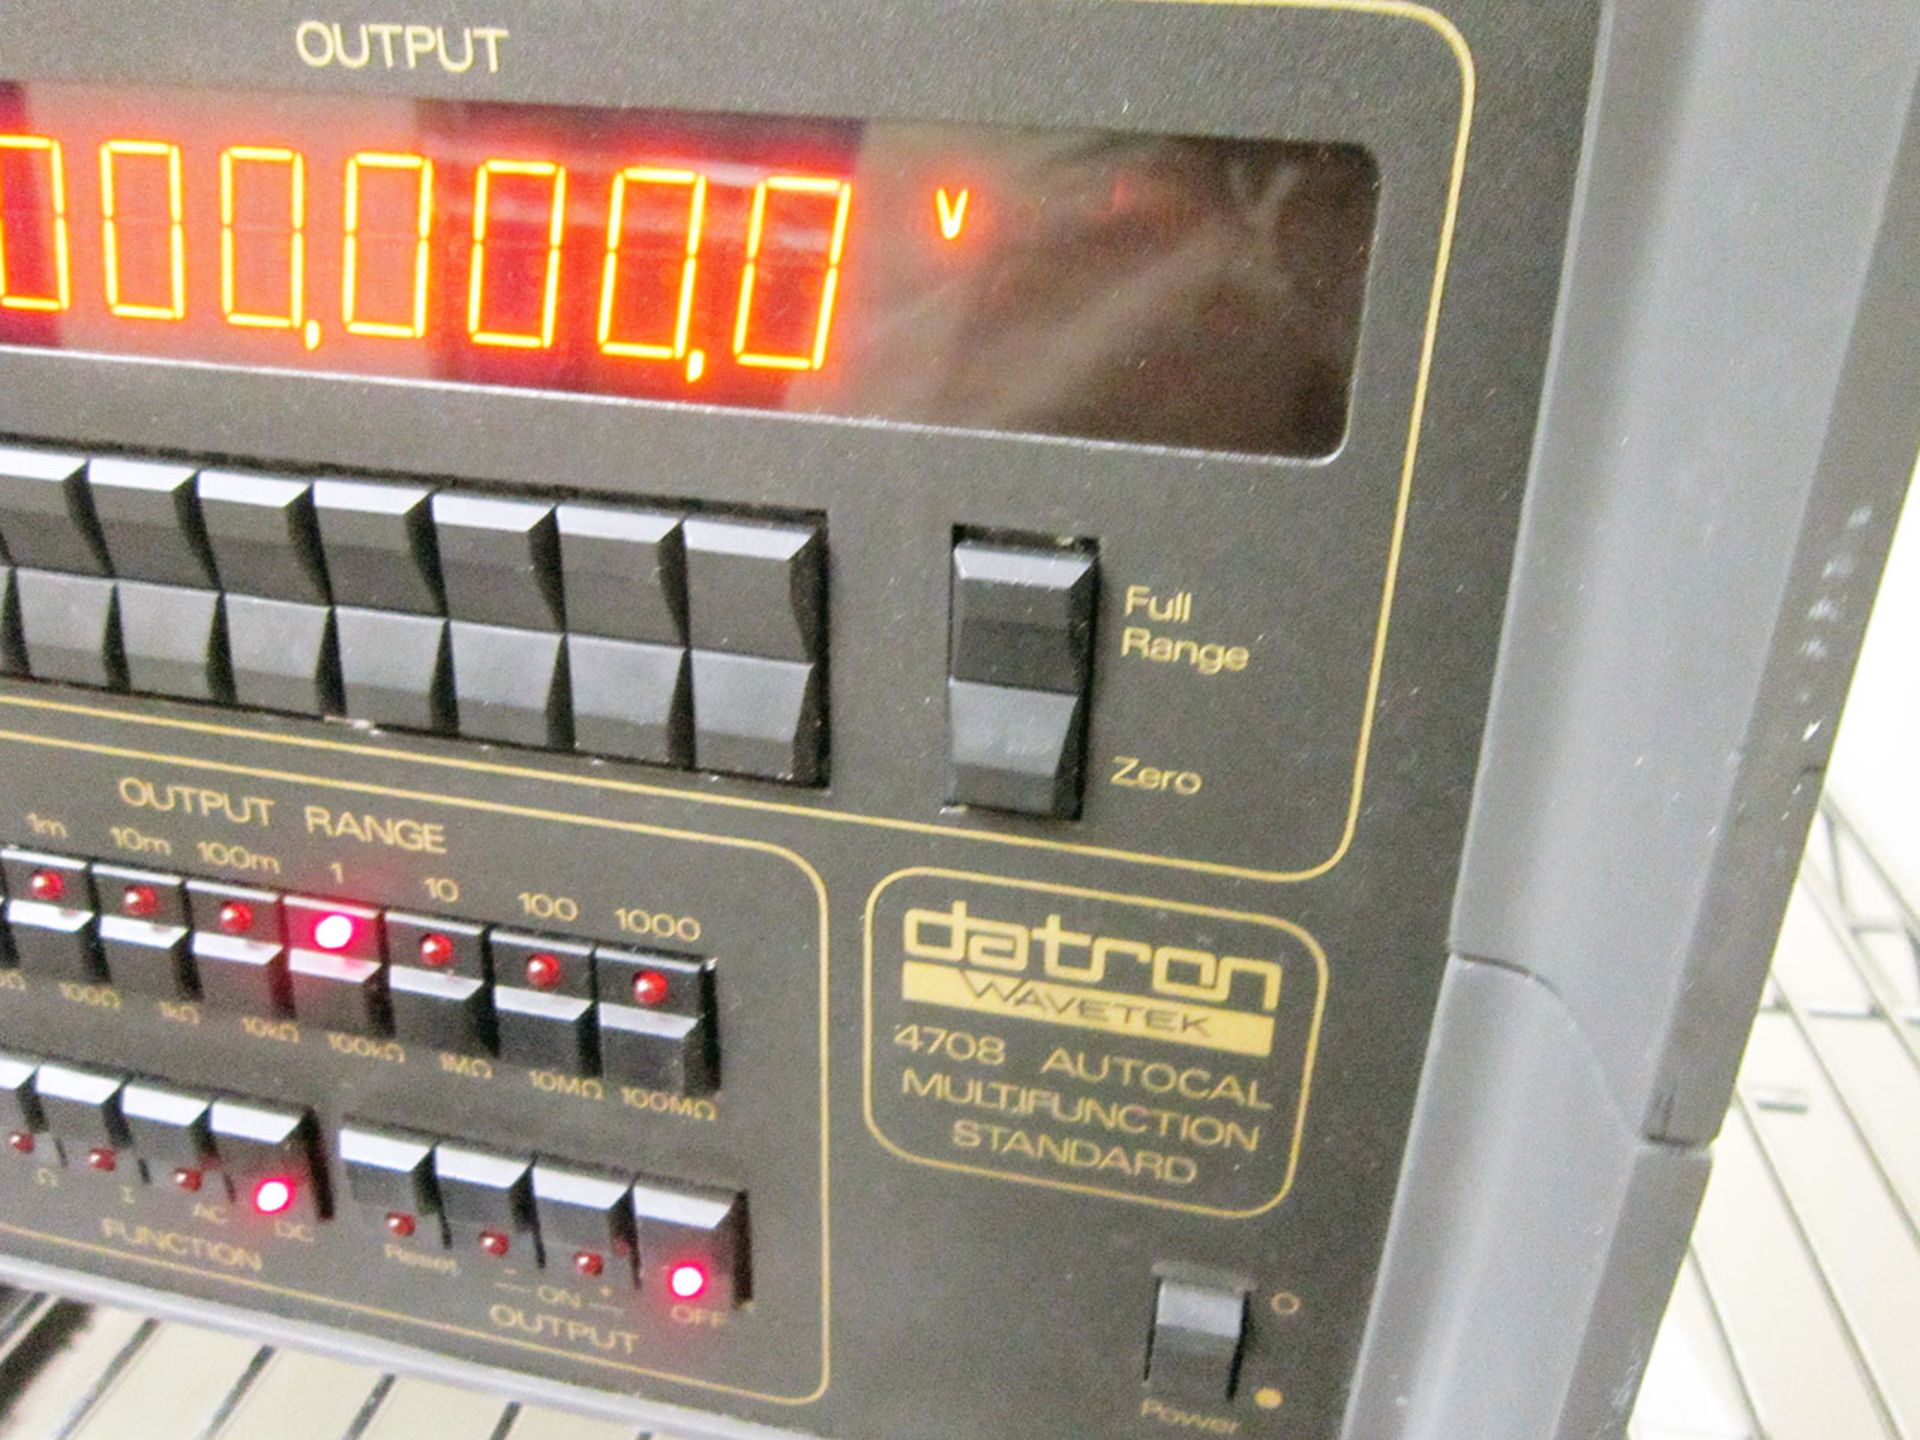 Datron Wavetek 4708 Autocal Multifunction Standard Opt: 10 20 30 80 - Image 2 of 4